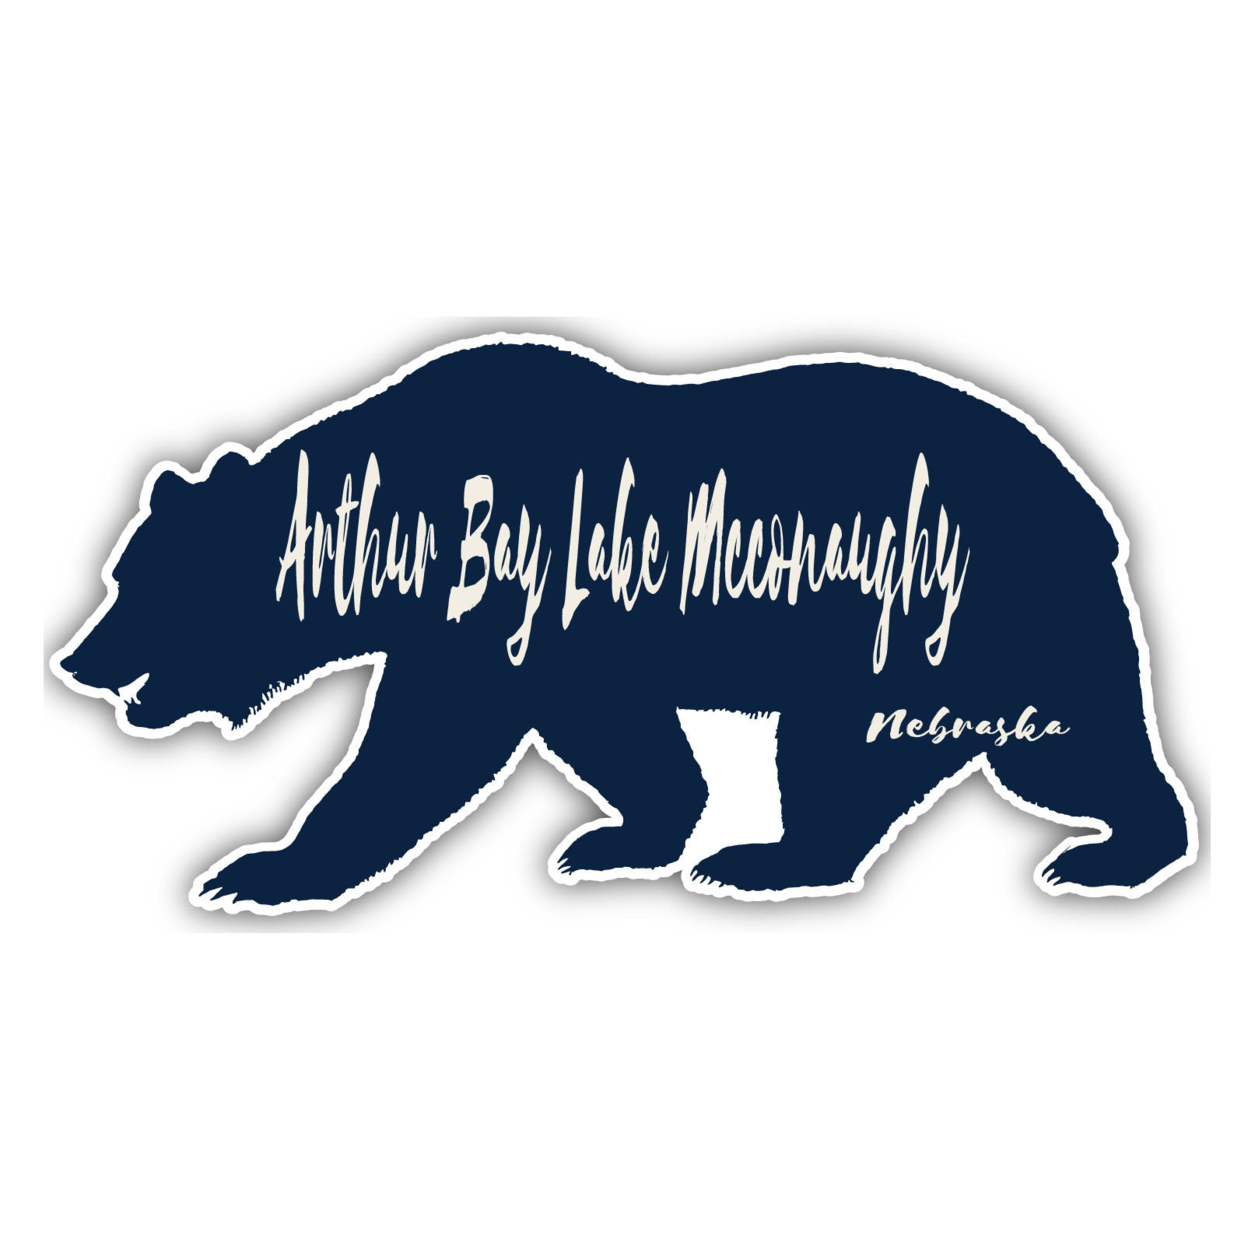 Arthur Bay Lake Mcconaughy Nebraska Souvenir Decorative Stickers (Choose Theme And Size) - 4-Pack, 8-Inch, Bear